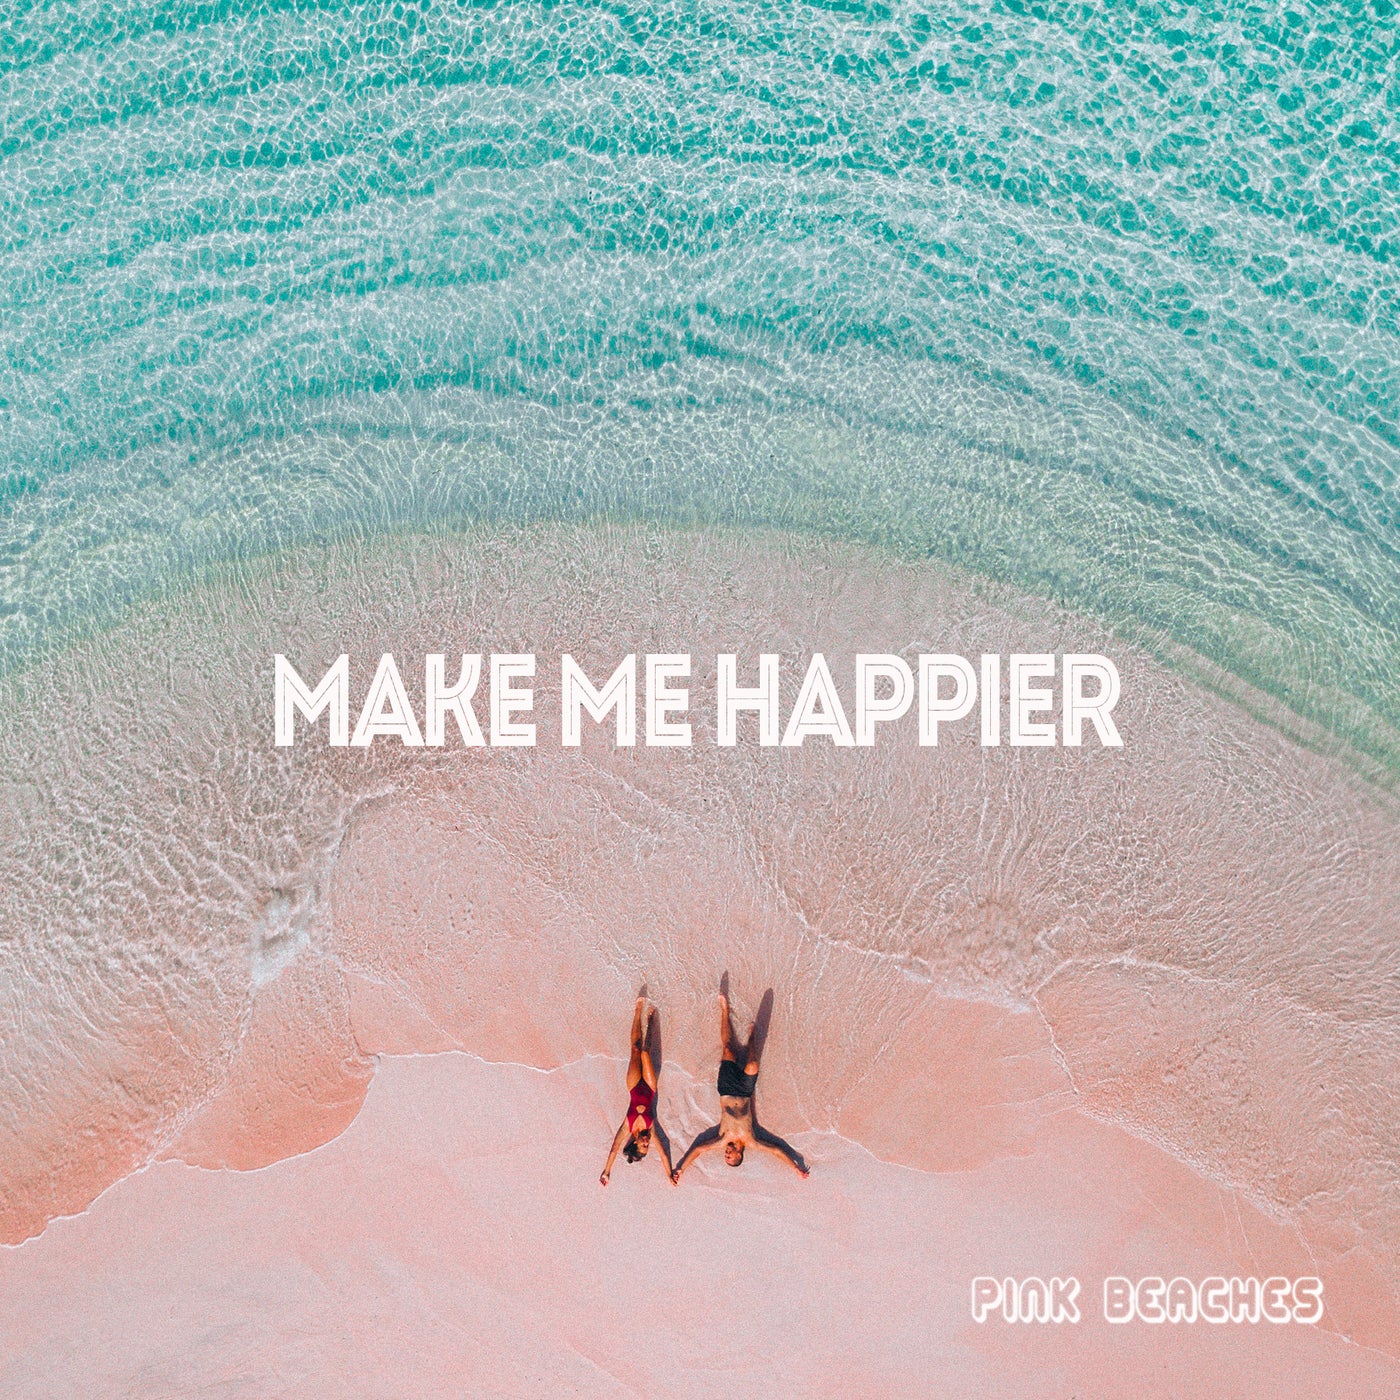 Make Me Happier